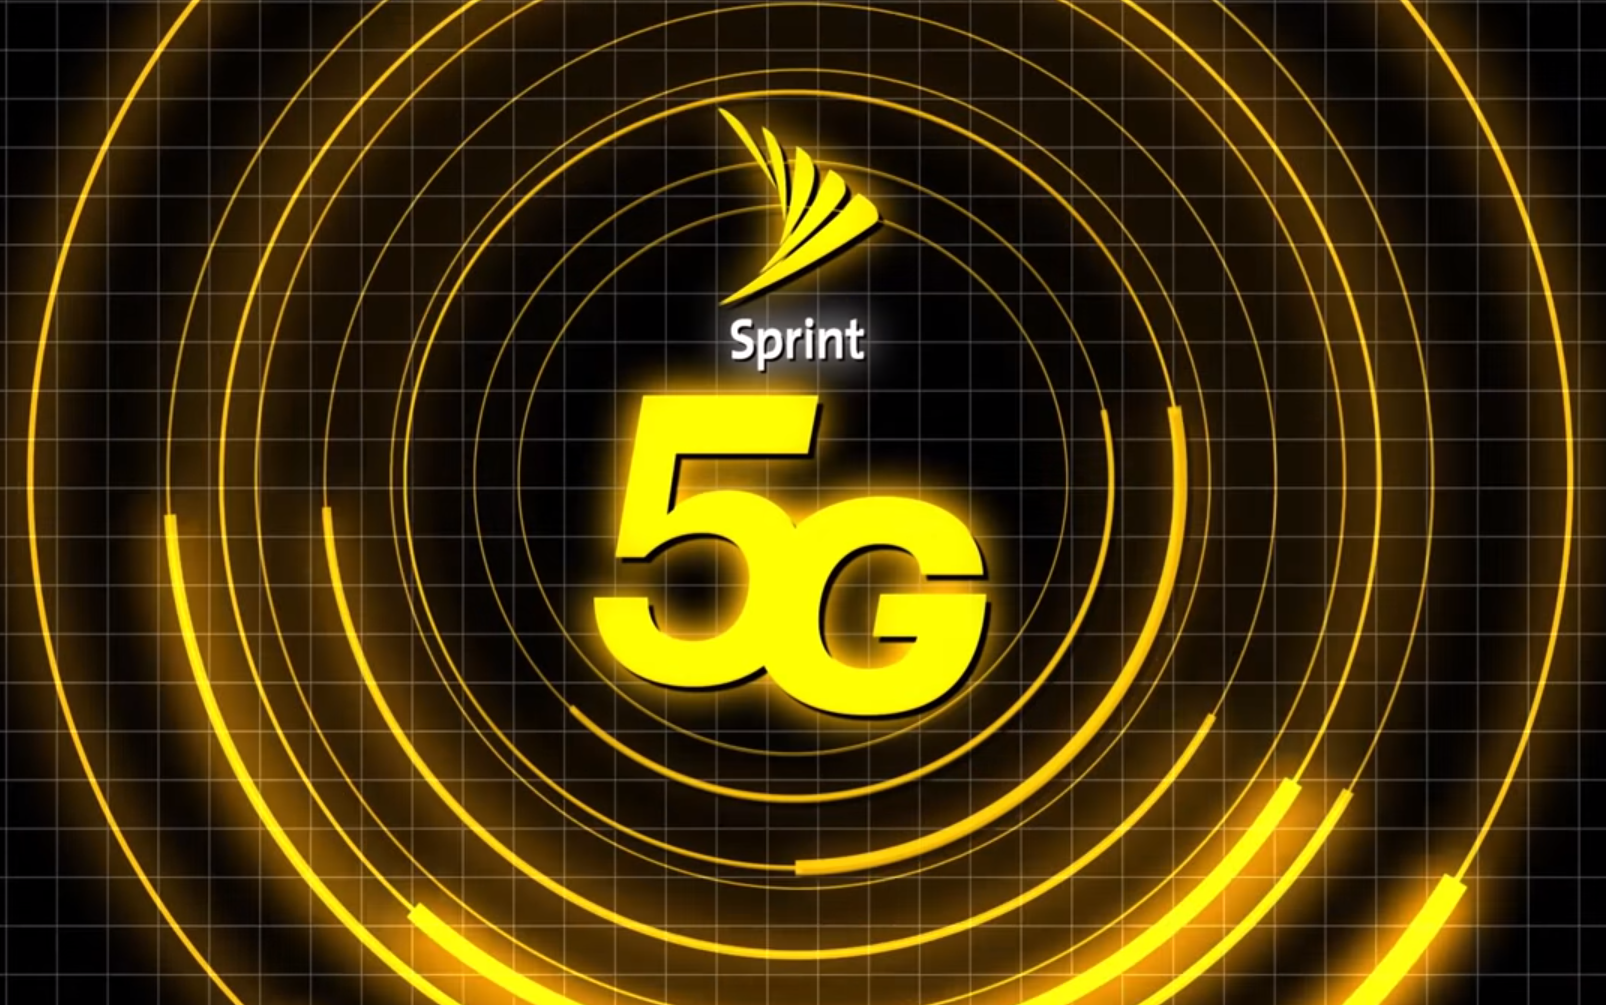 Sprint 5G network